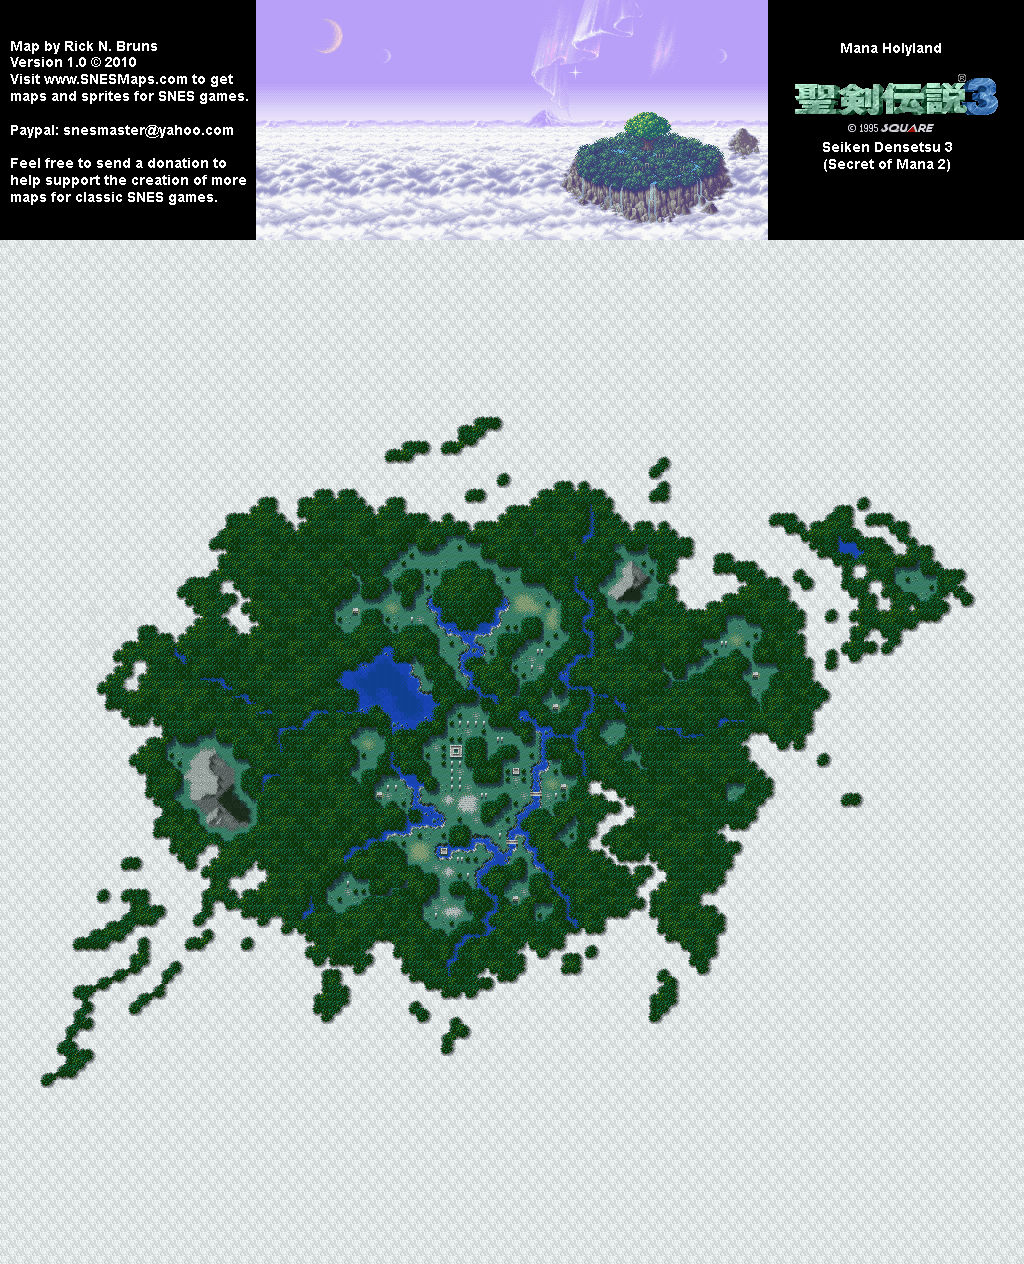 Seiken Densetsu 3 (Secret of Mana 2) - Holyland Overworld Super Nintendo SNES Map